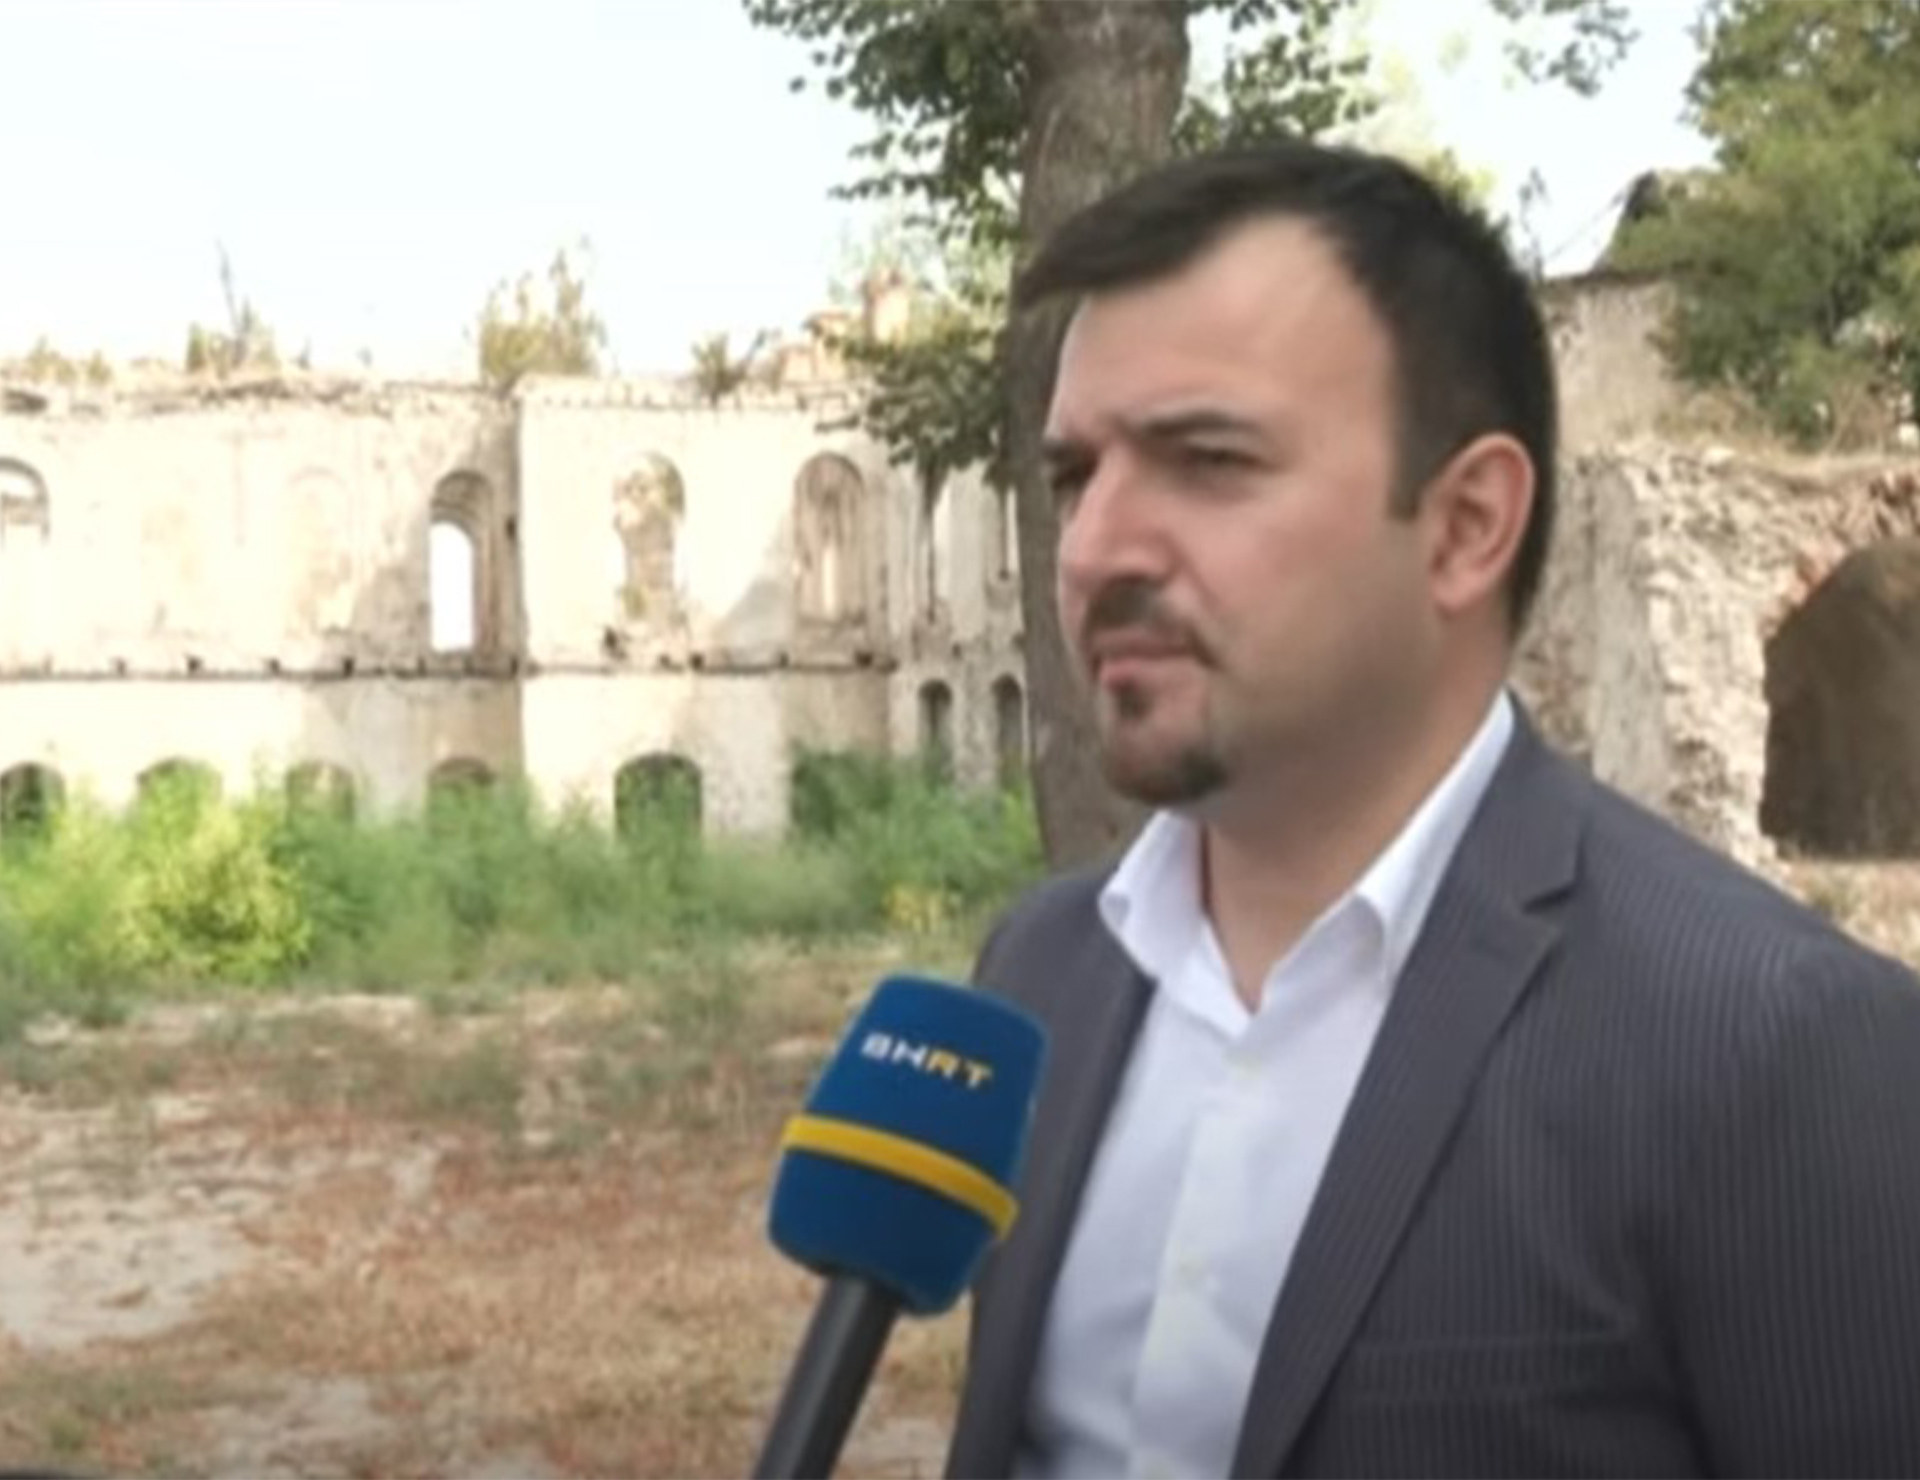 Rusif Huseynov`s interviee to BHRT - "Radiotelevizija Bosne i Hercegovine"